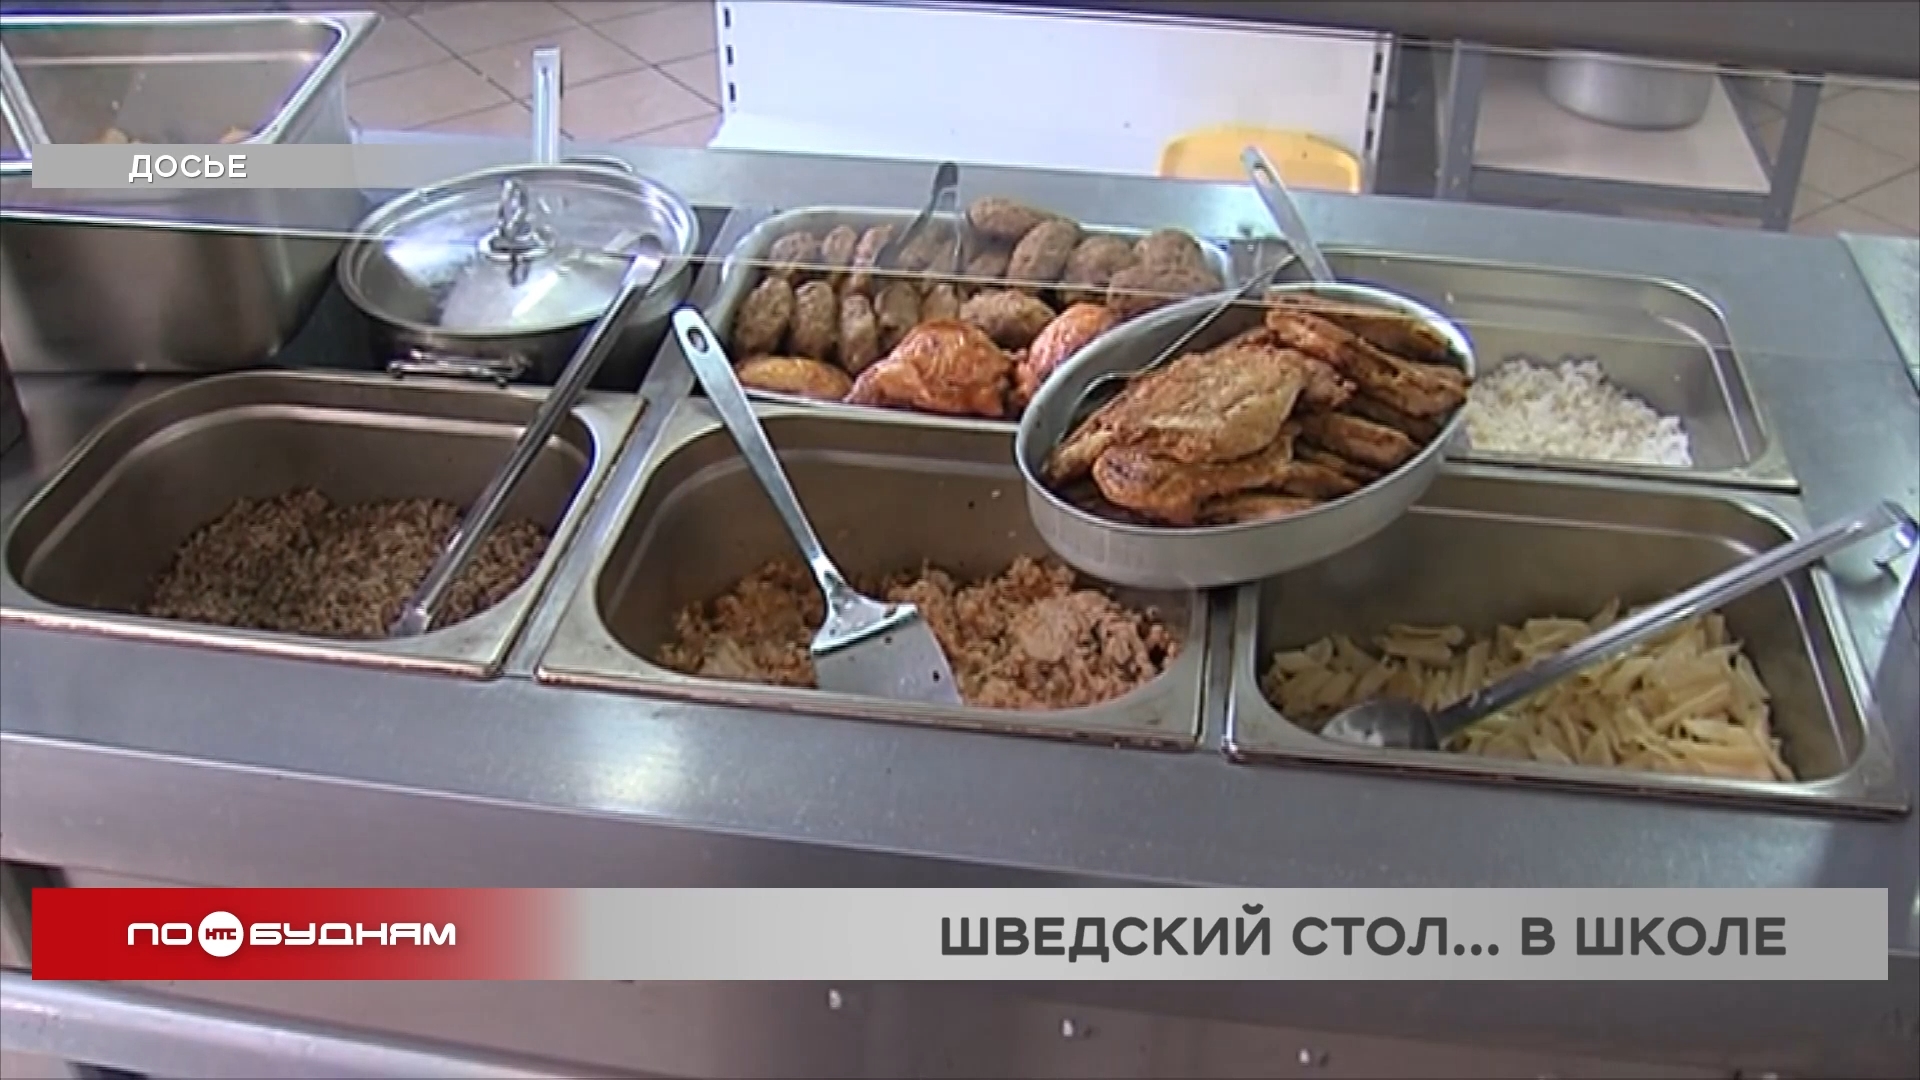 Новую систему питания хотят ввести в школах Иркутска